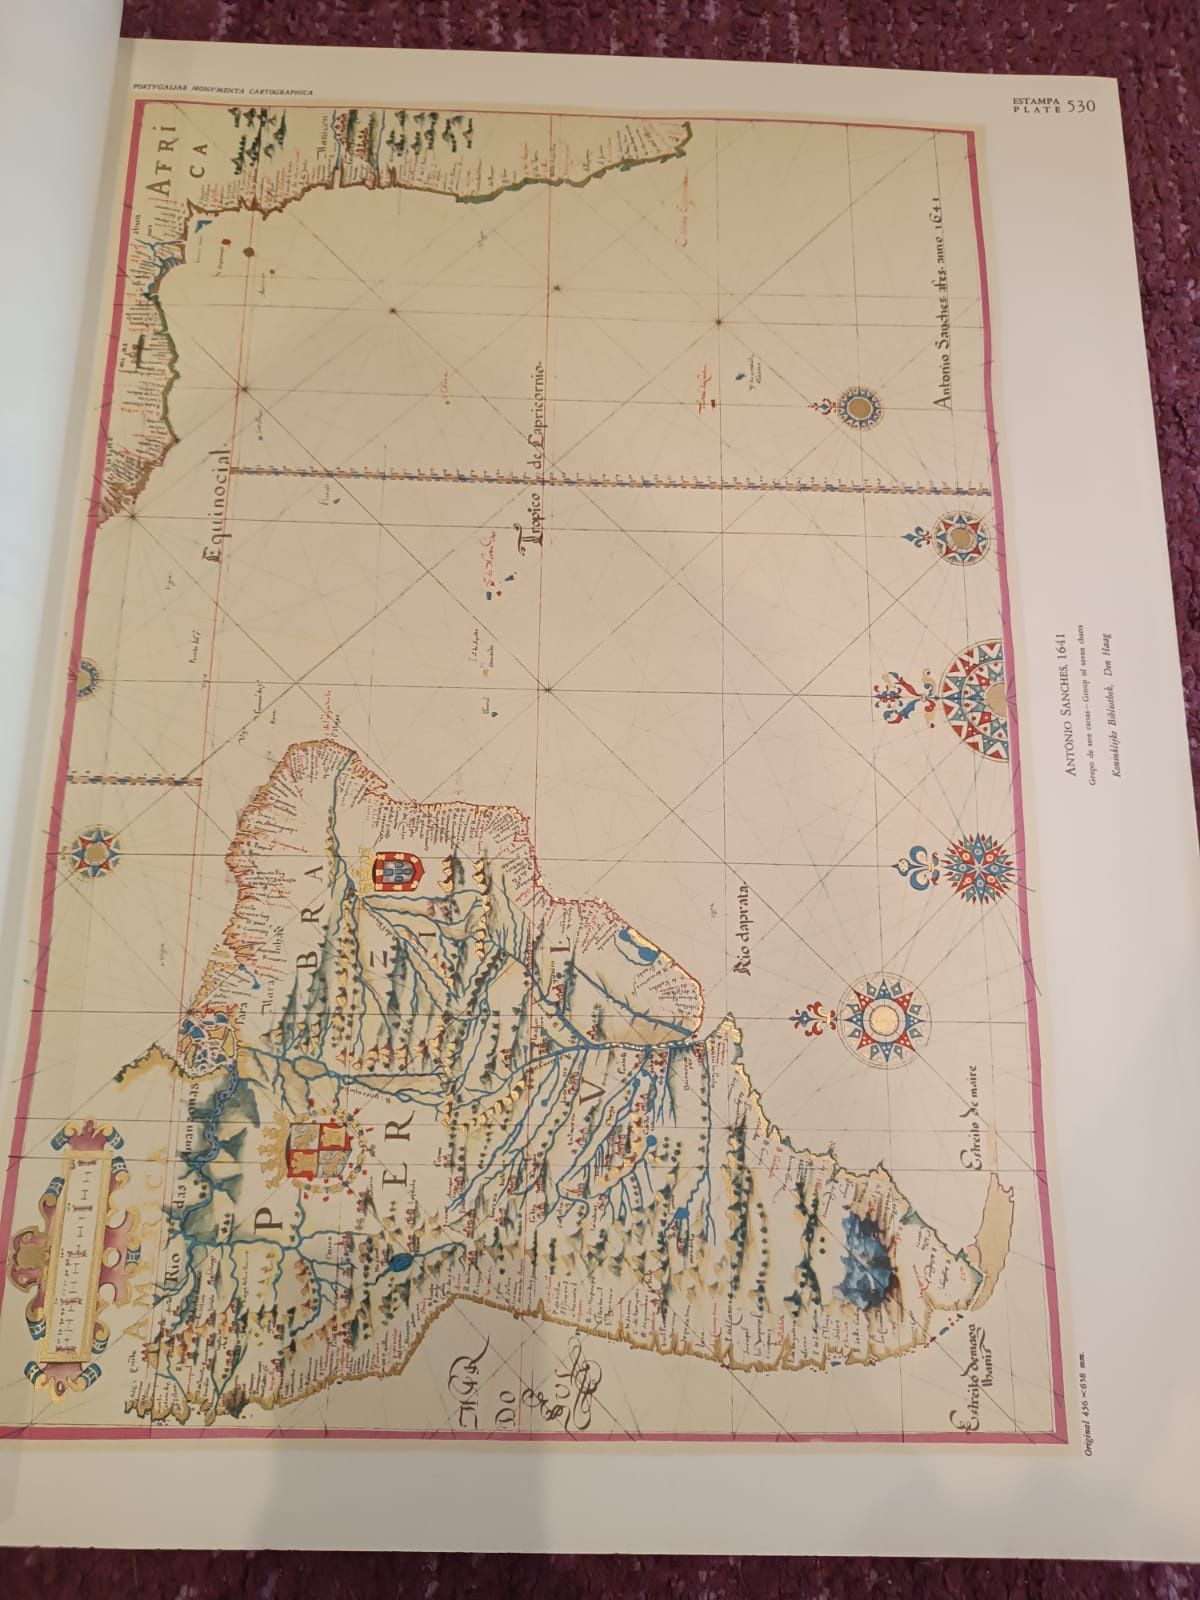 Livro - PORTVGALIAE MONVMENTA cartographia - Volume V 61cm x 50 cm